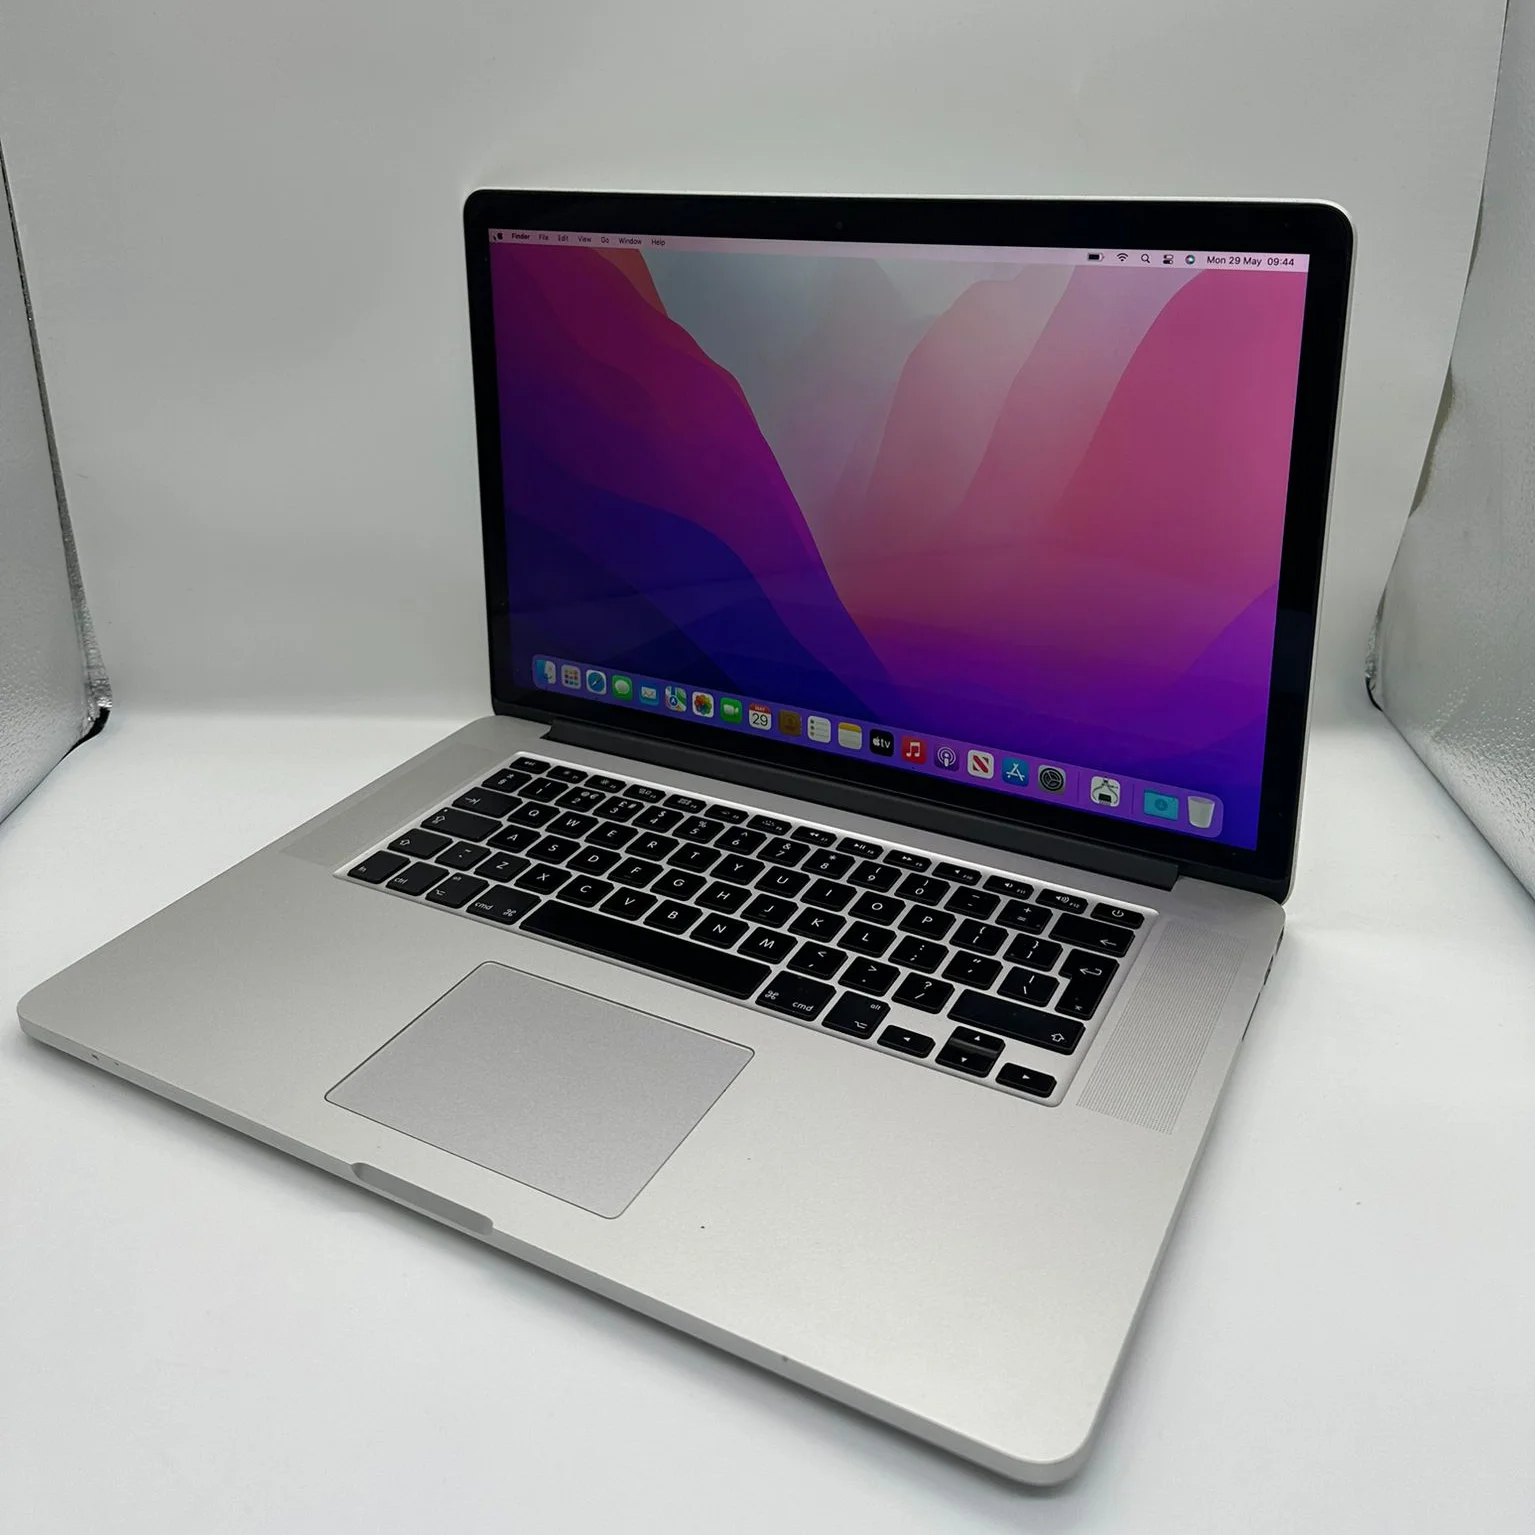 Apple MacBook Pro 2015 MacOS Monterey OSX intel i7 16GB Ram & 256 GB SSD